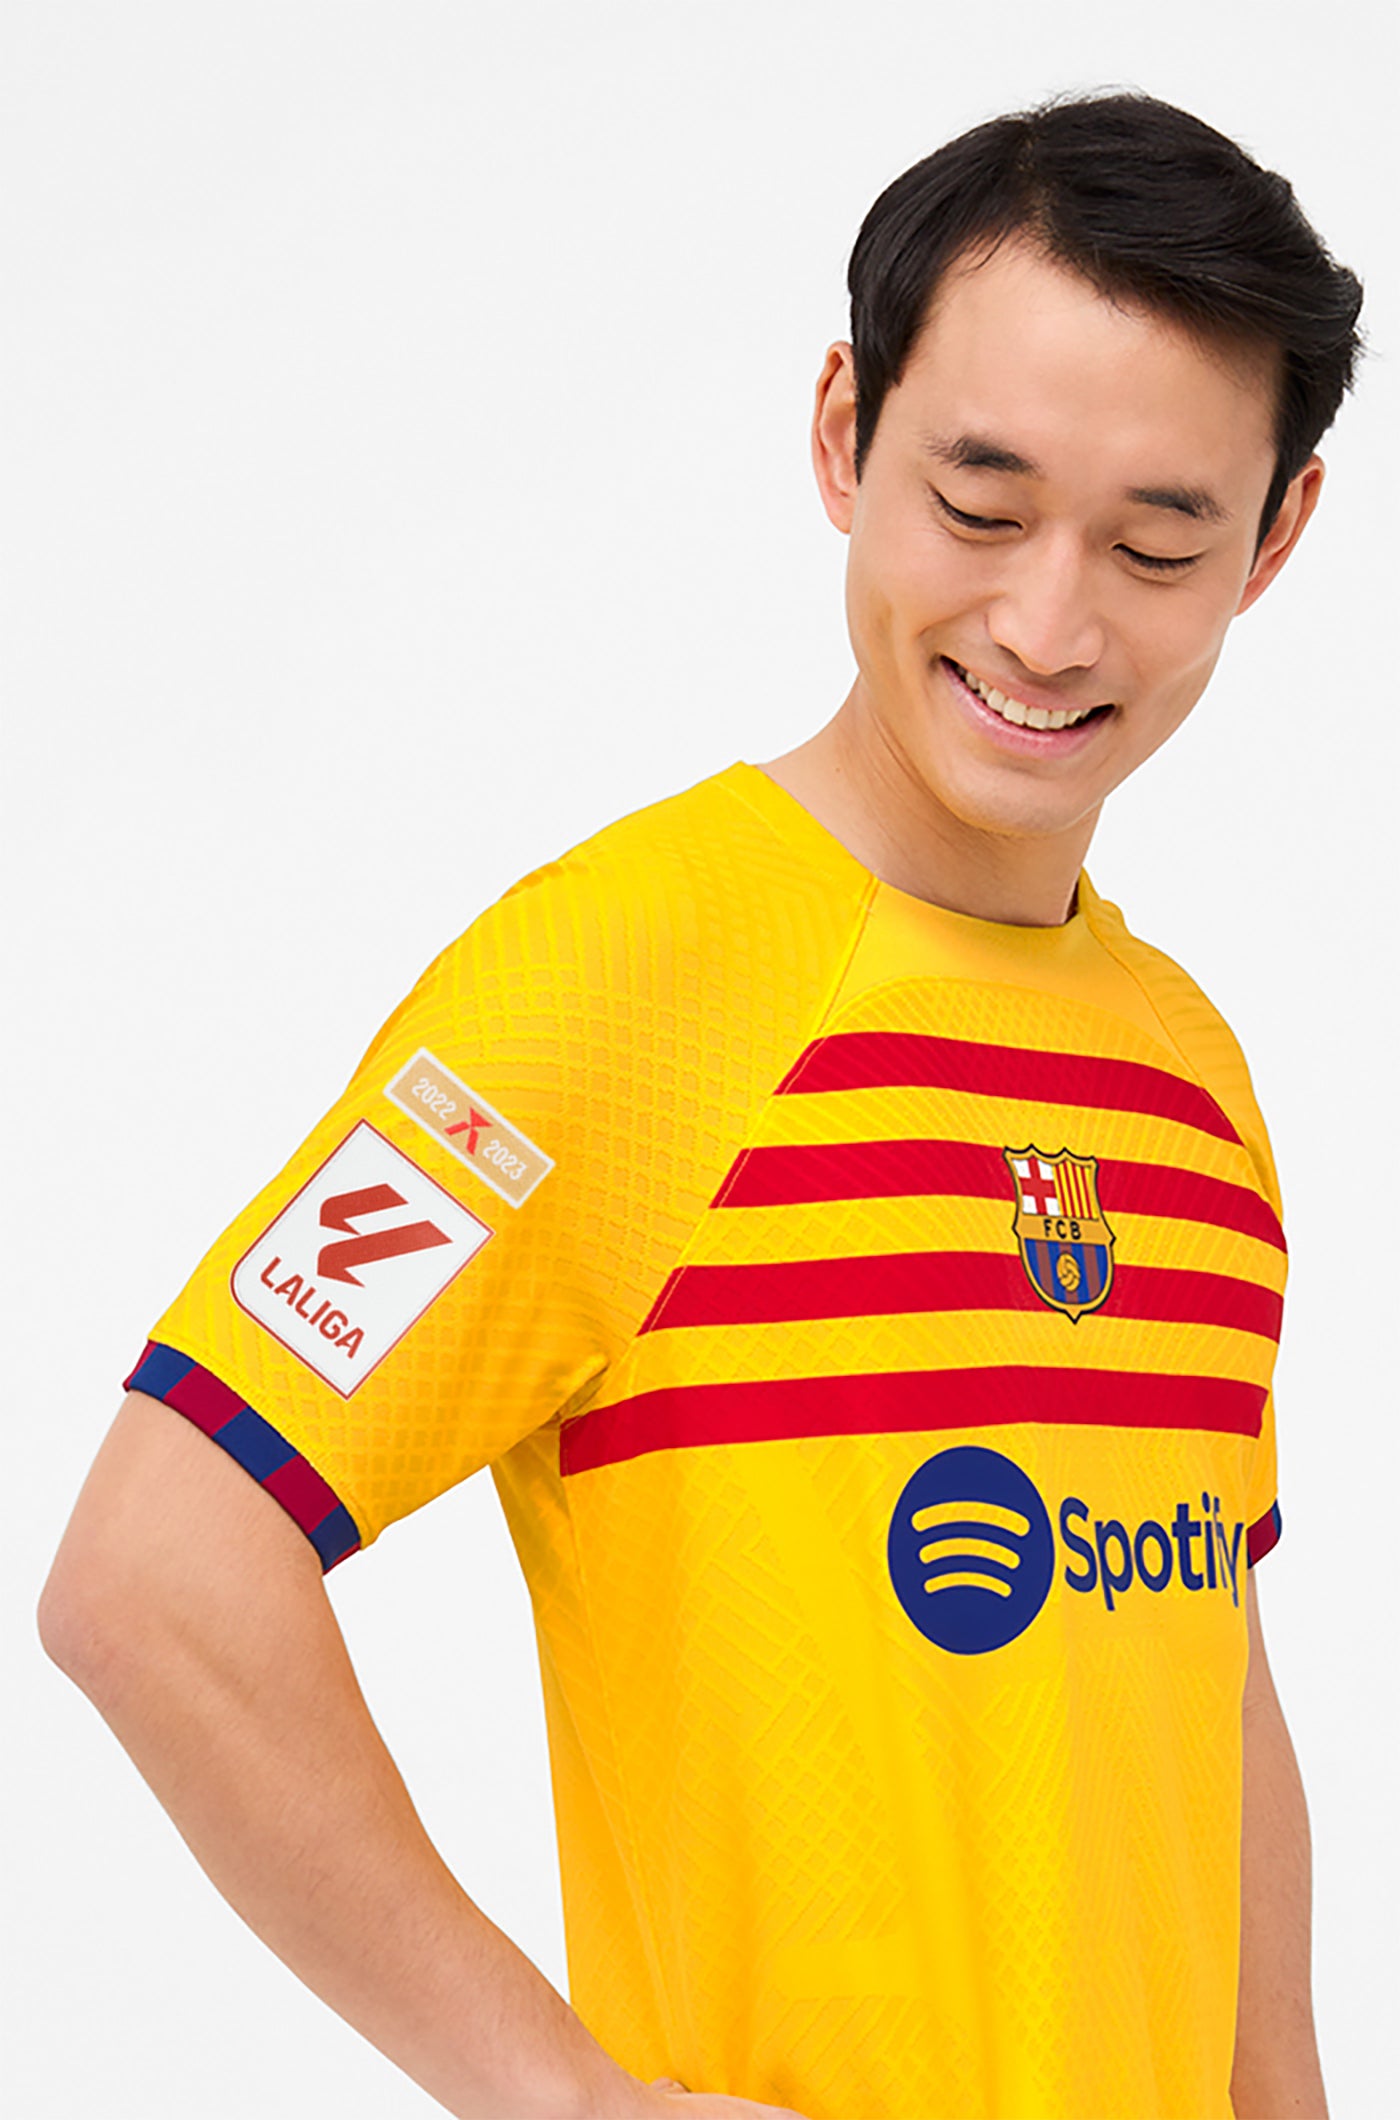 LFP FC Barcelona fourth shirt 23/24 Player’s Edition  - RAPHINHA